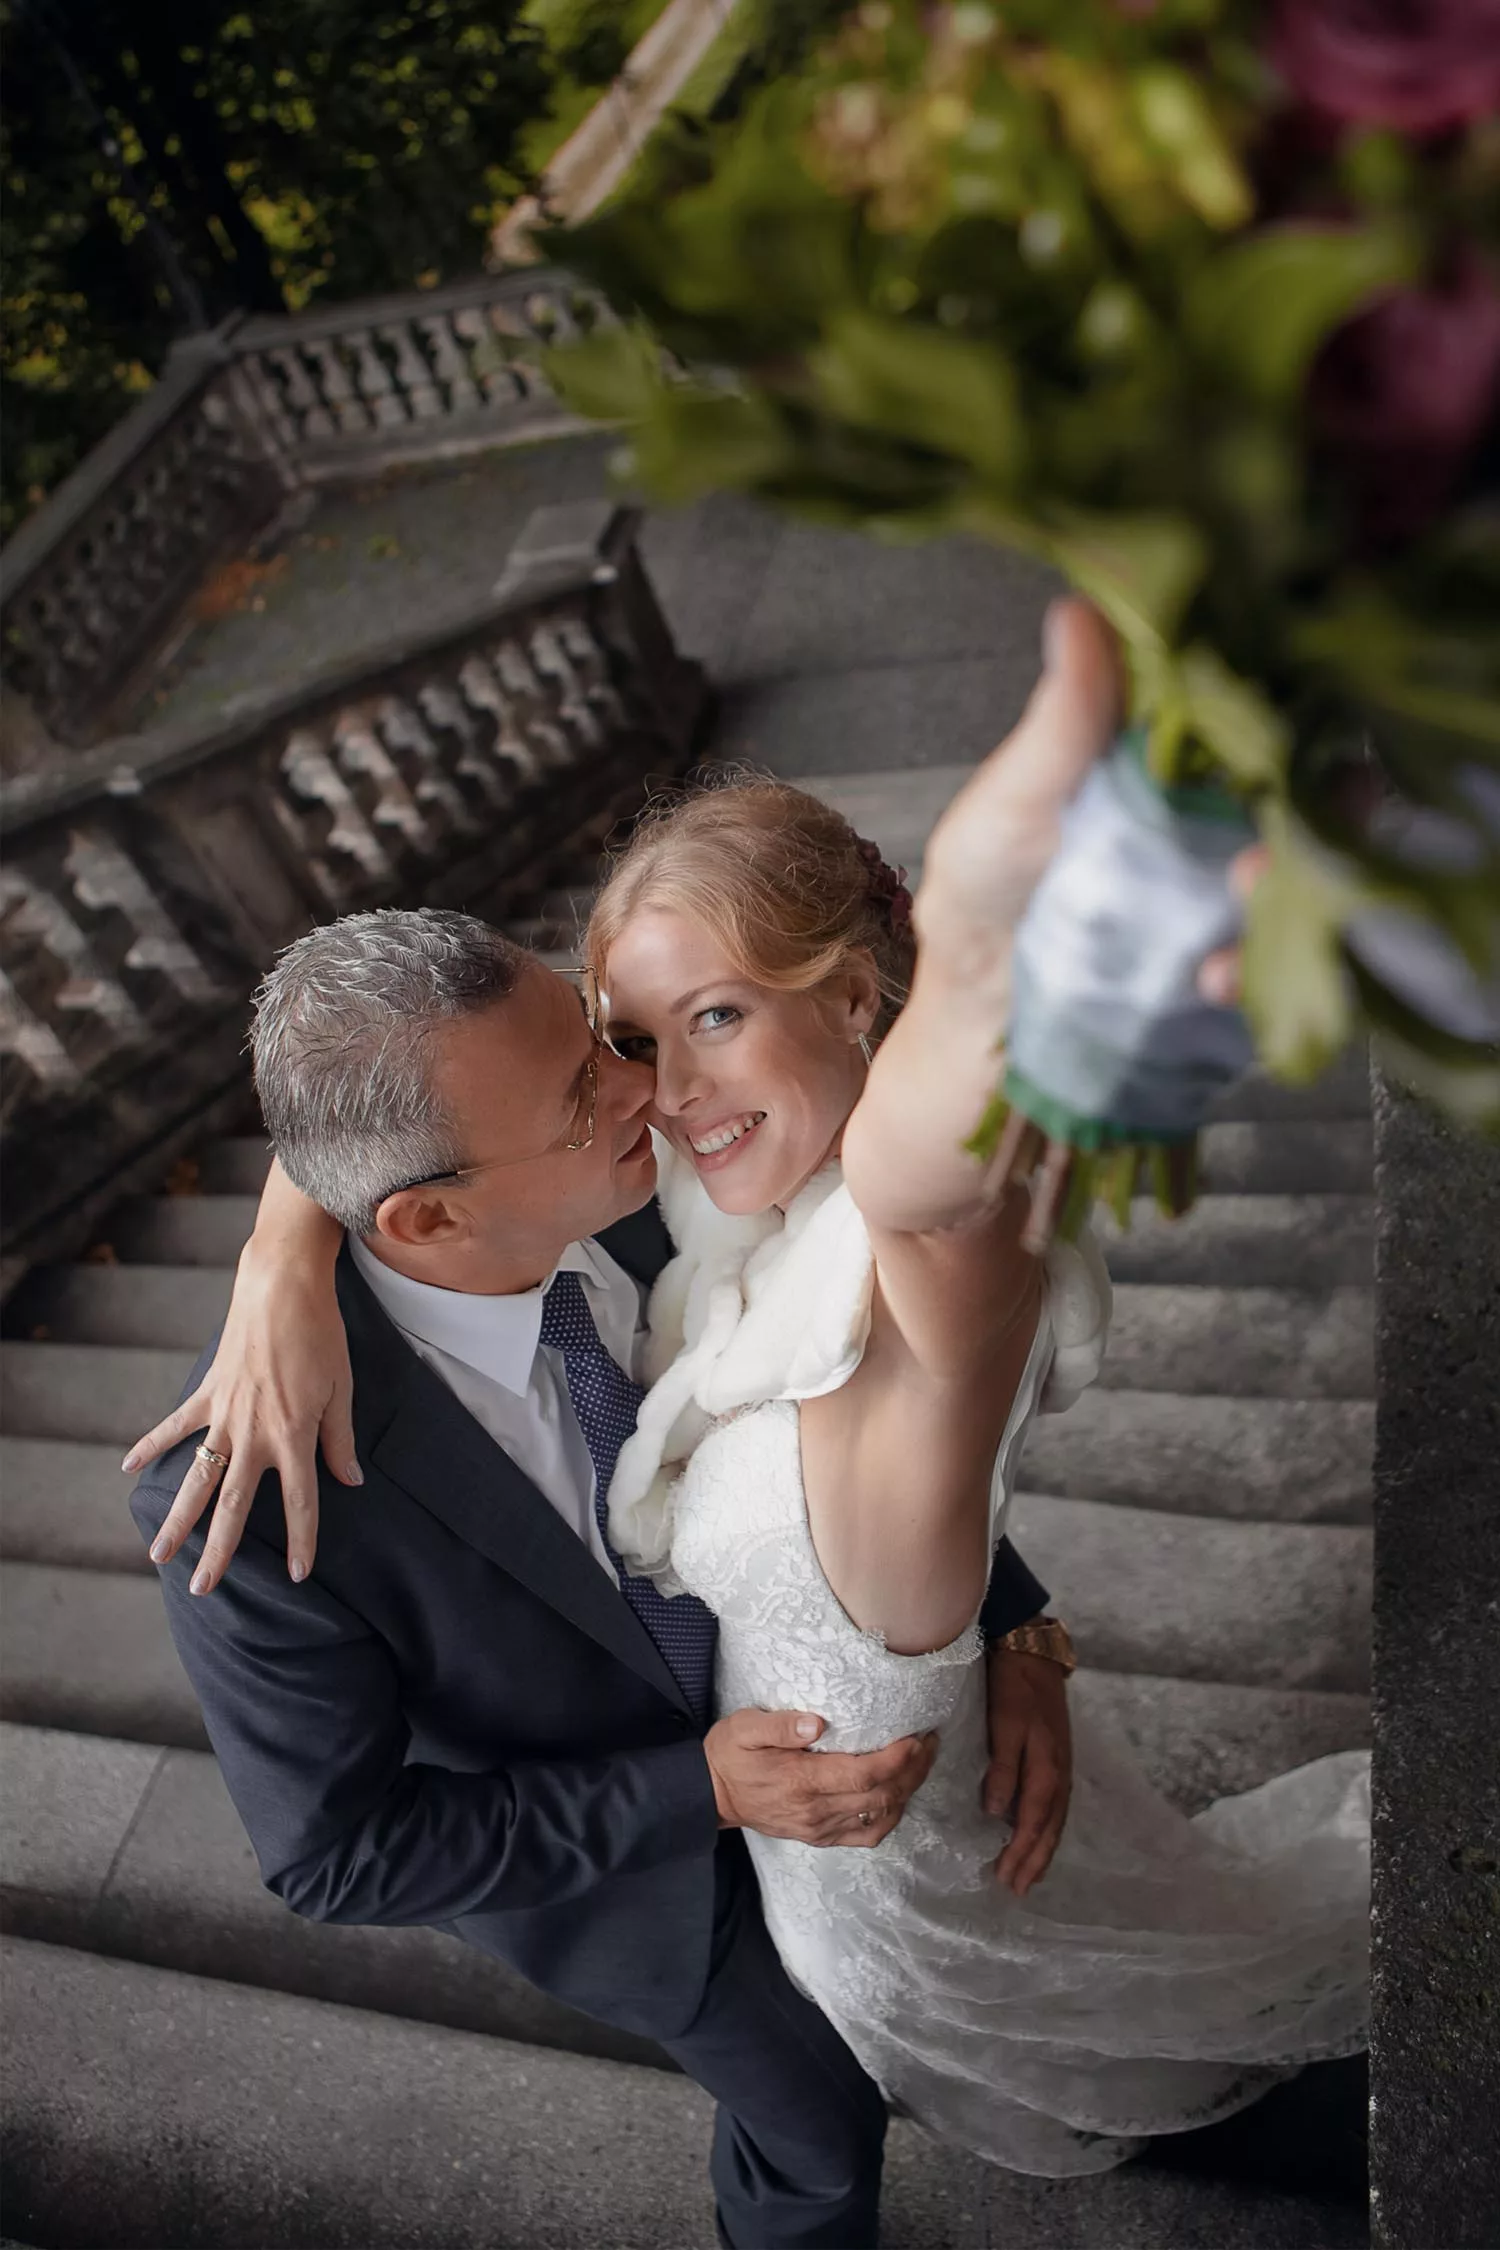 Fotograf Standesamt Muenchen Hochzeitsfotografie Muenchen Hochzeitsfotos Hochzeit Muenchen Heiraten Fotoshooting Muenchen